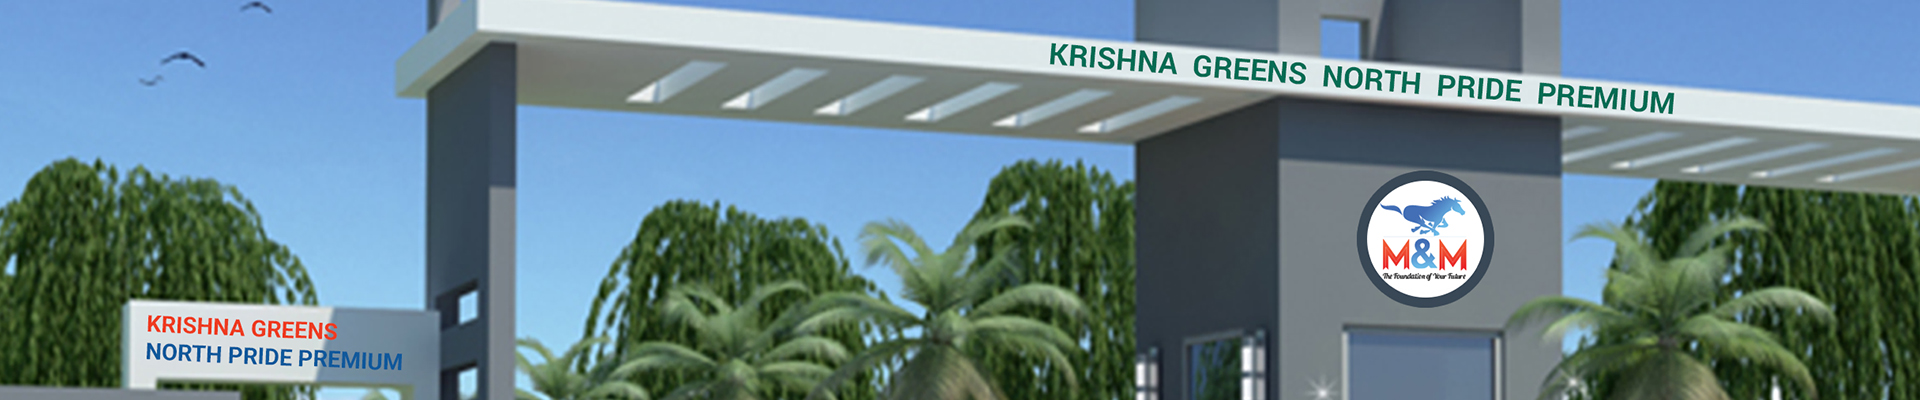 Krishna Greens North Pride Premium